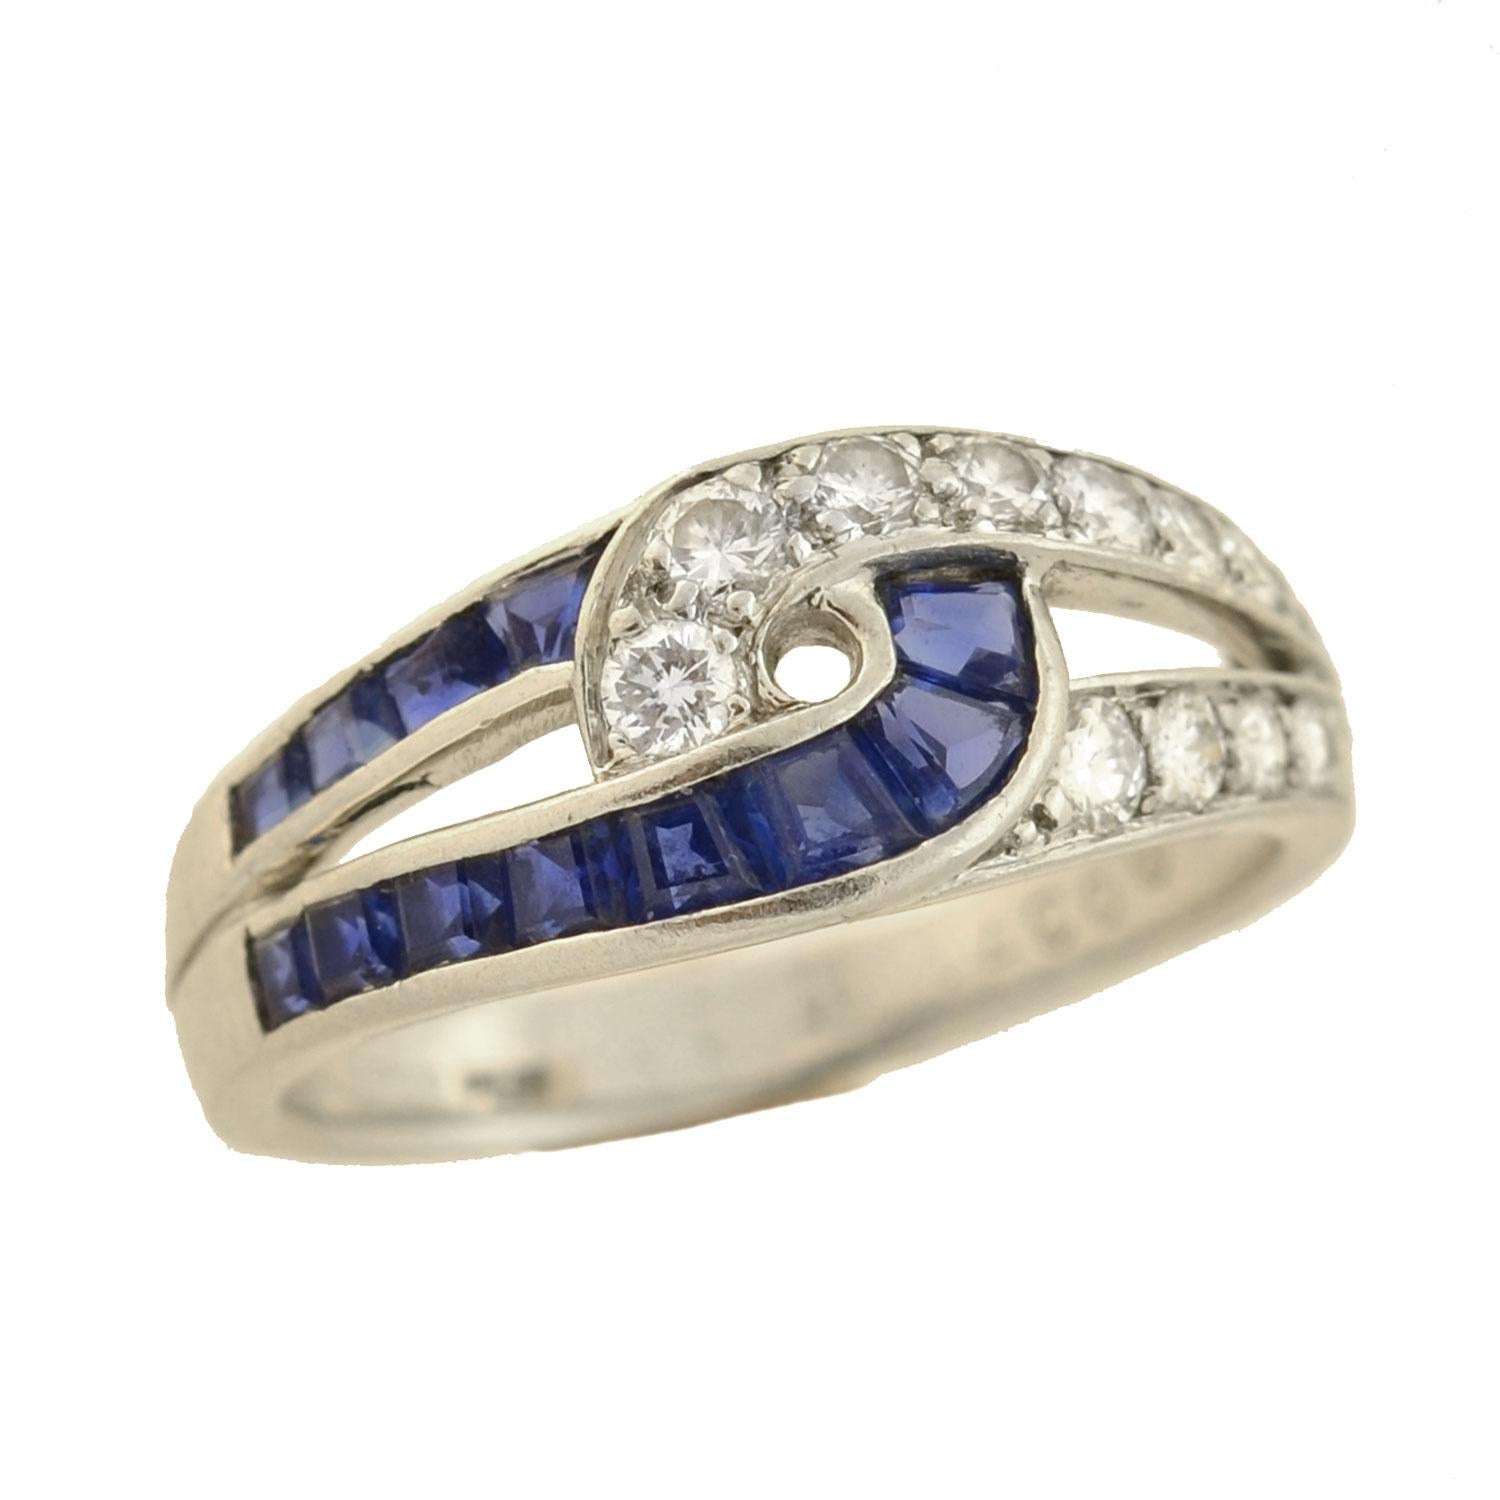 Contemporary Oscar Heyman Vintage Diamond and Sapphire Interlocking Link Ring